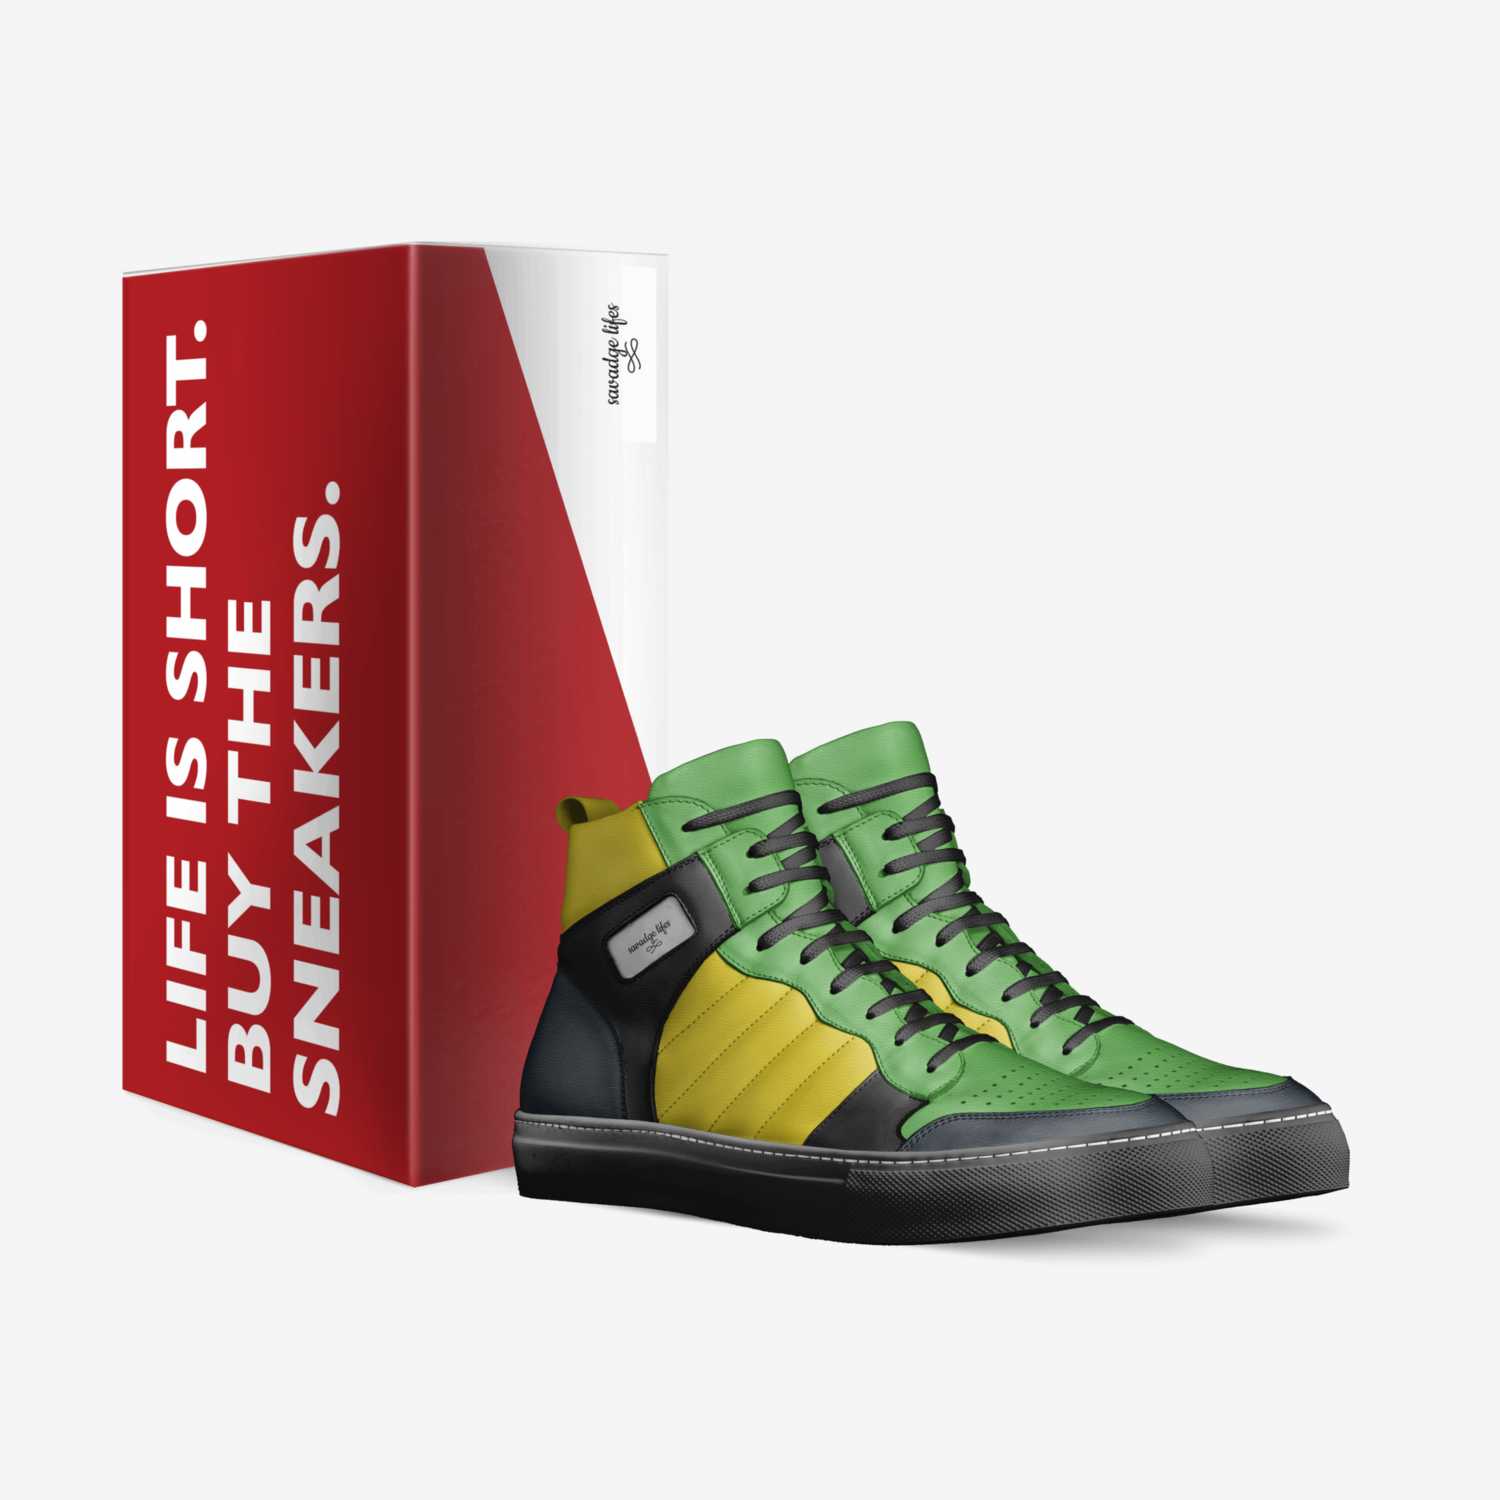 savadge lifes custom made in Italy shoes by Jahree Khail Jarrel Watson | Box view